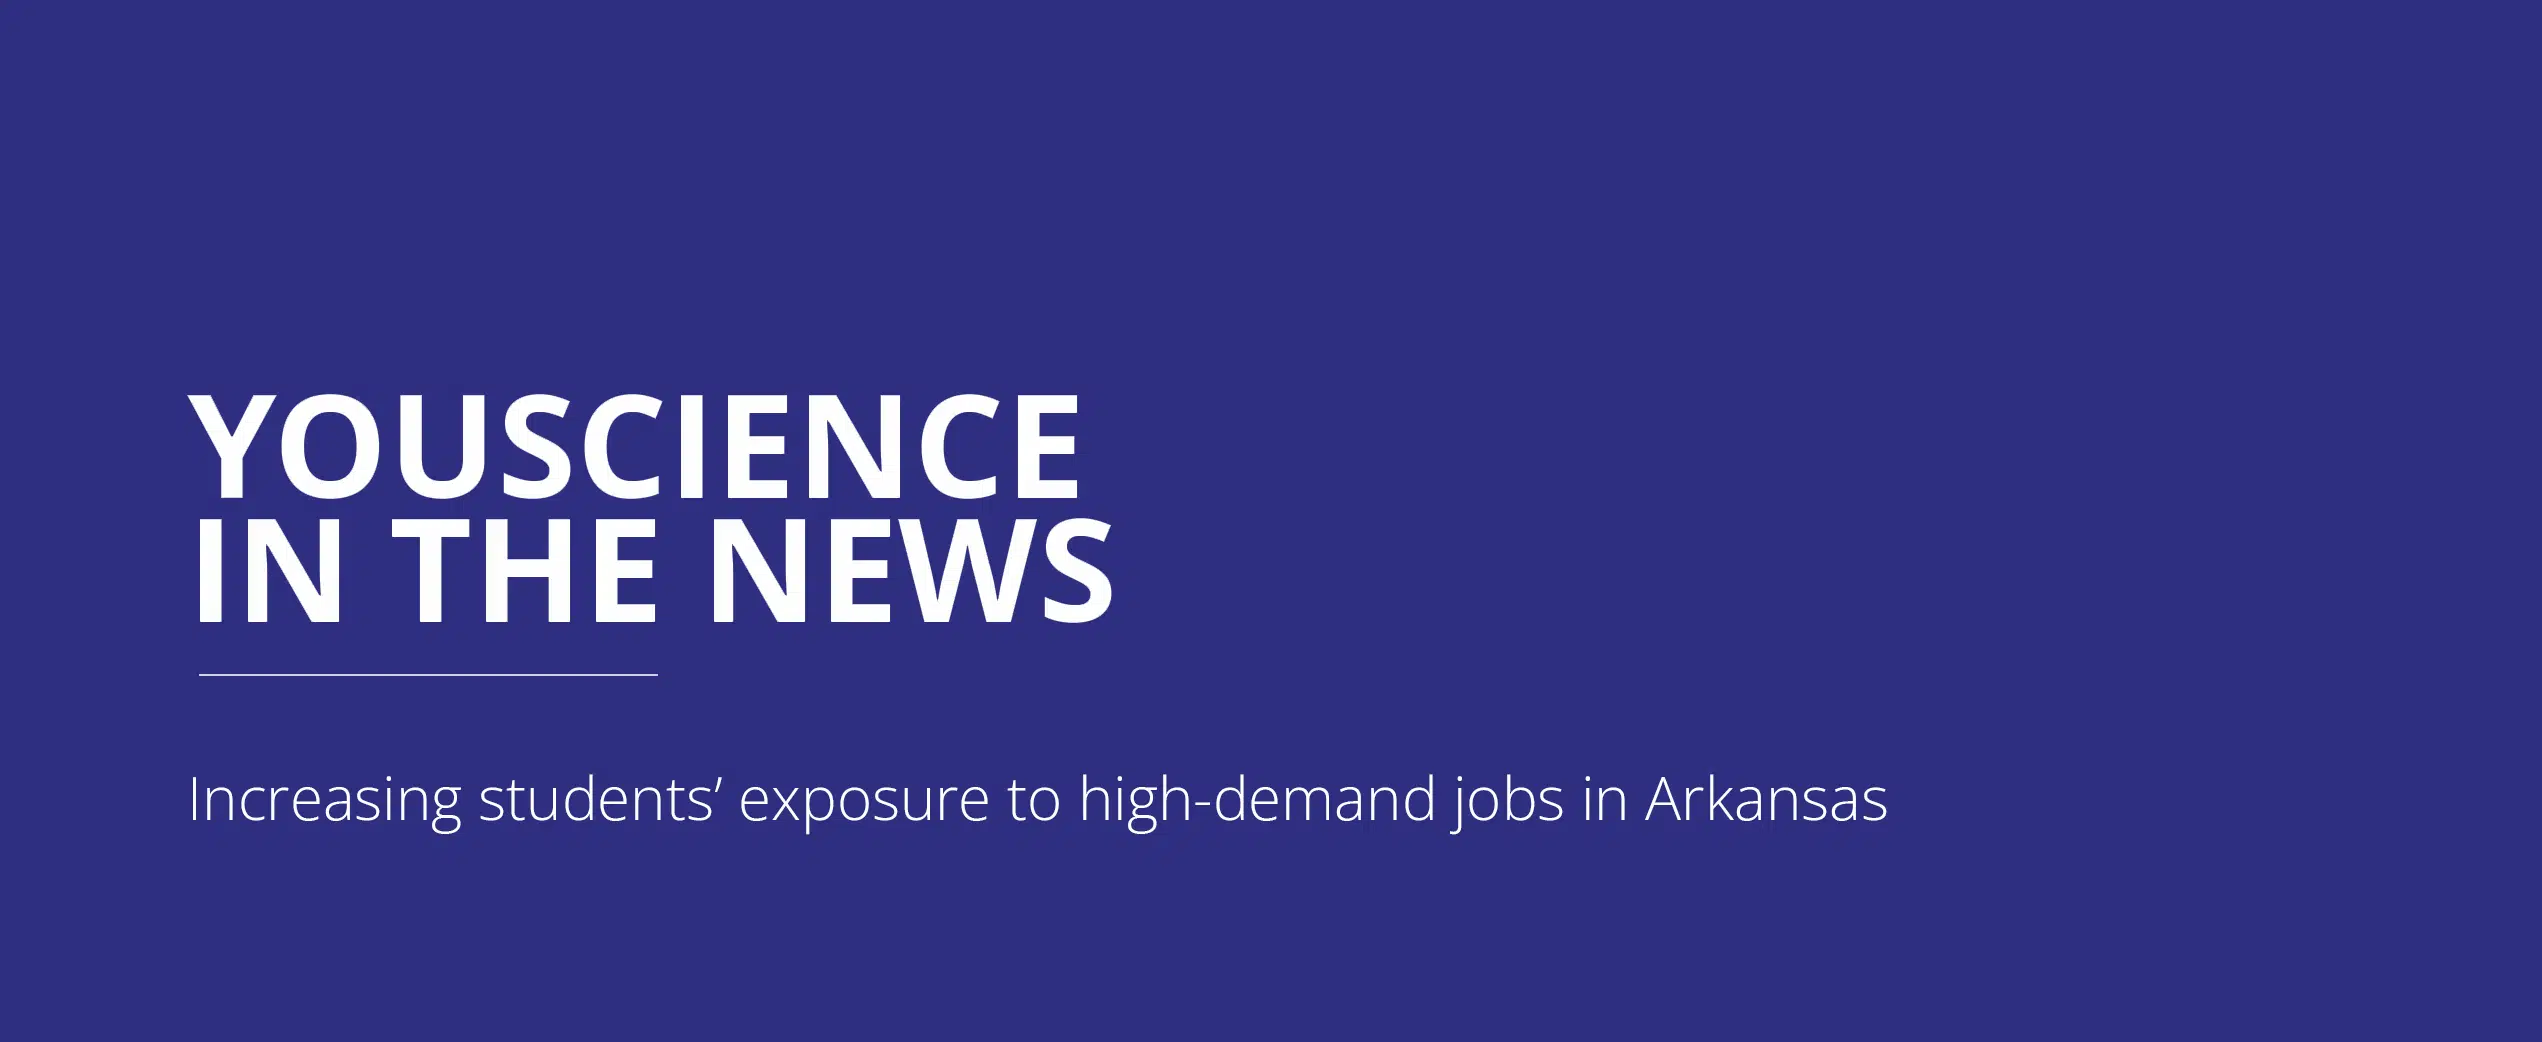 Increasing students’ exposure to high-demand jobs in Arkansas